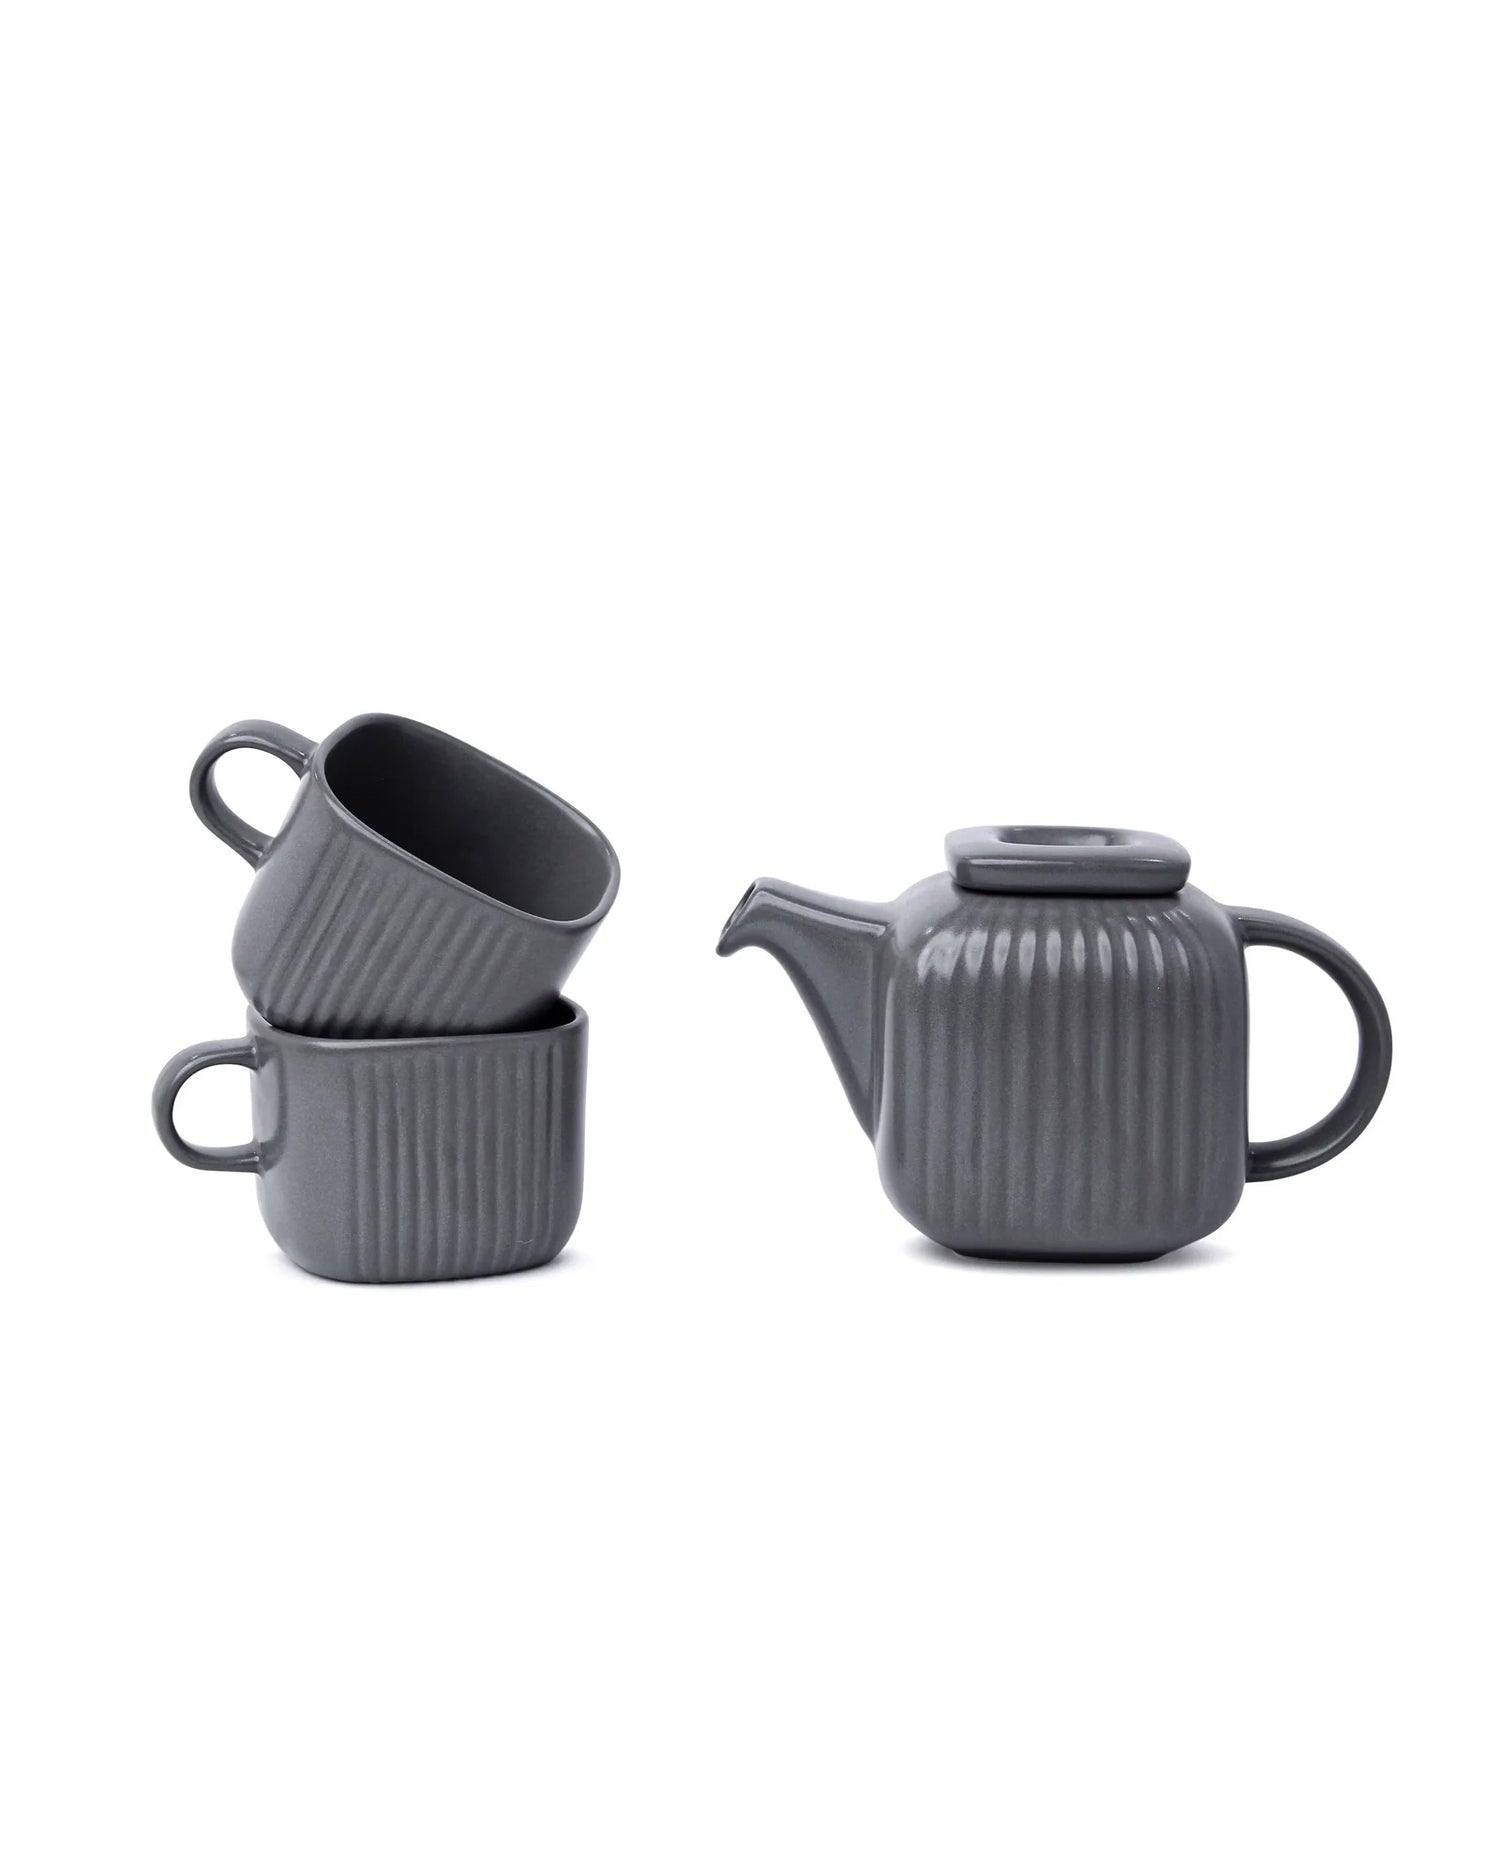 Pebble grey || Bloom Tea Trio: Elevate Your Tea Time